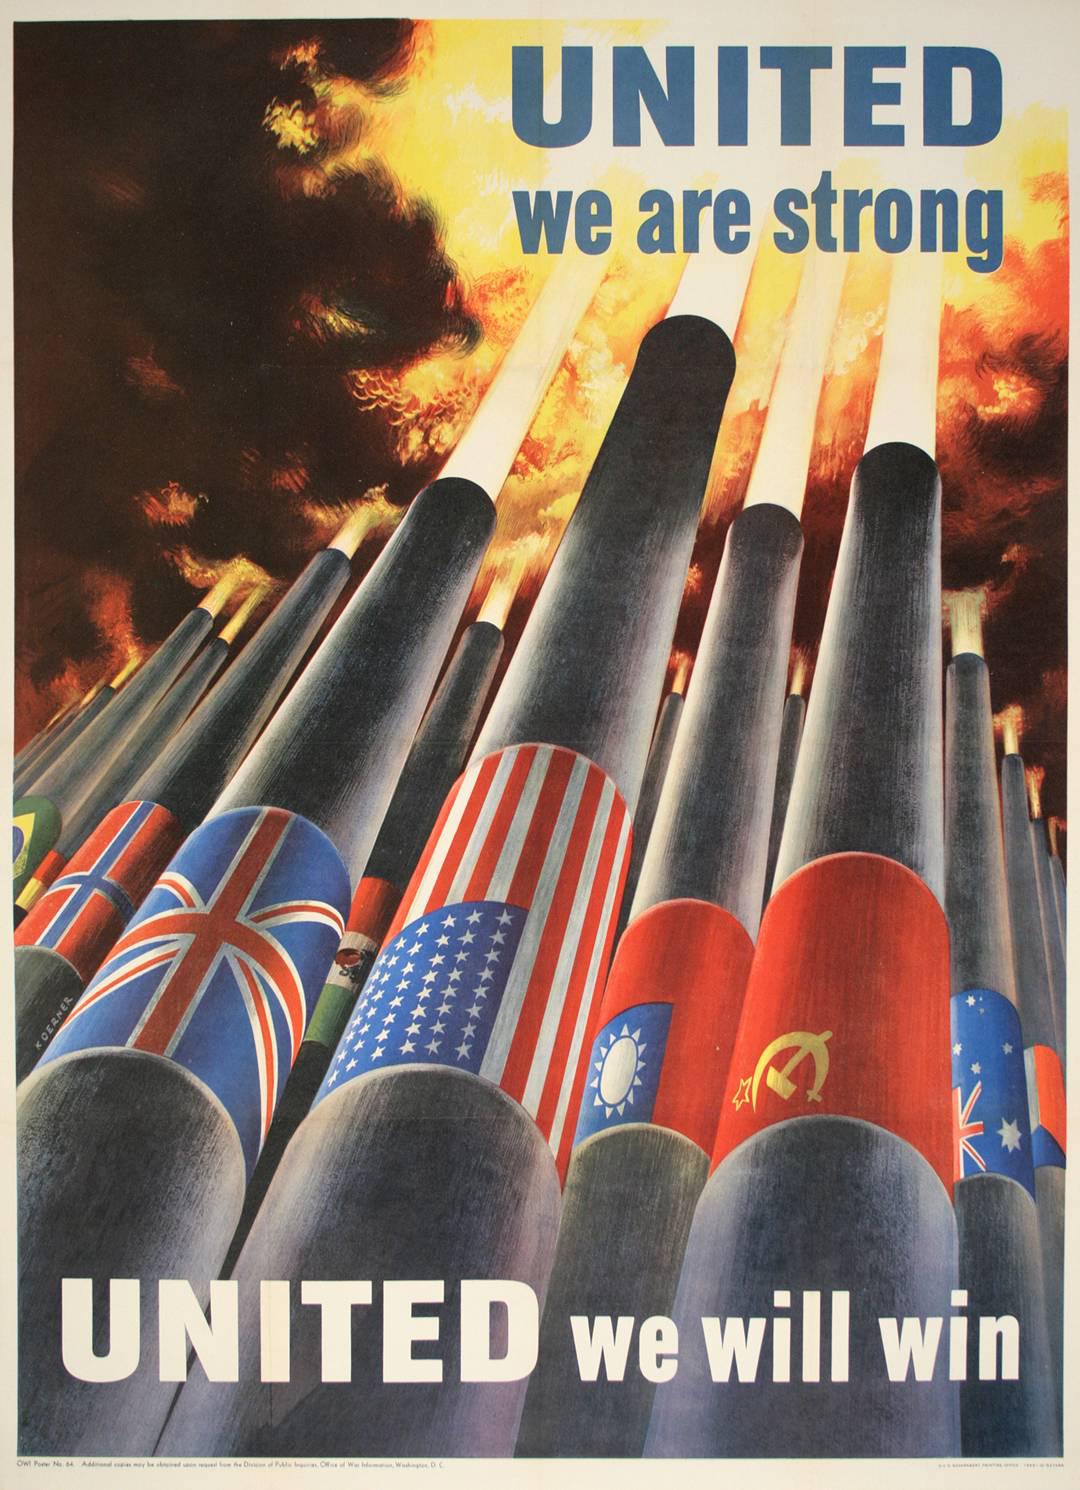 Original Vintage WWII Poster United We Are Strong by Henry Koerner Medium 1943